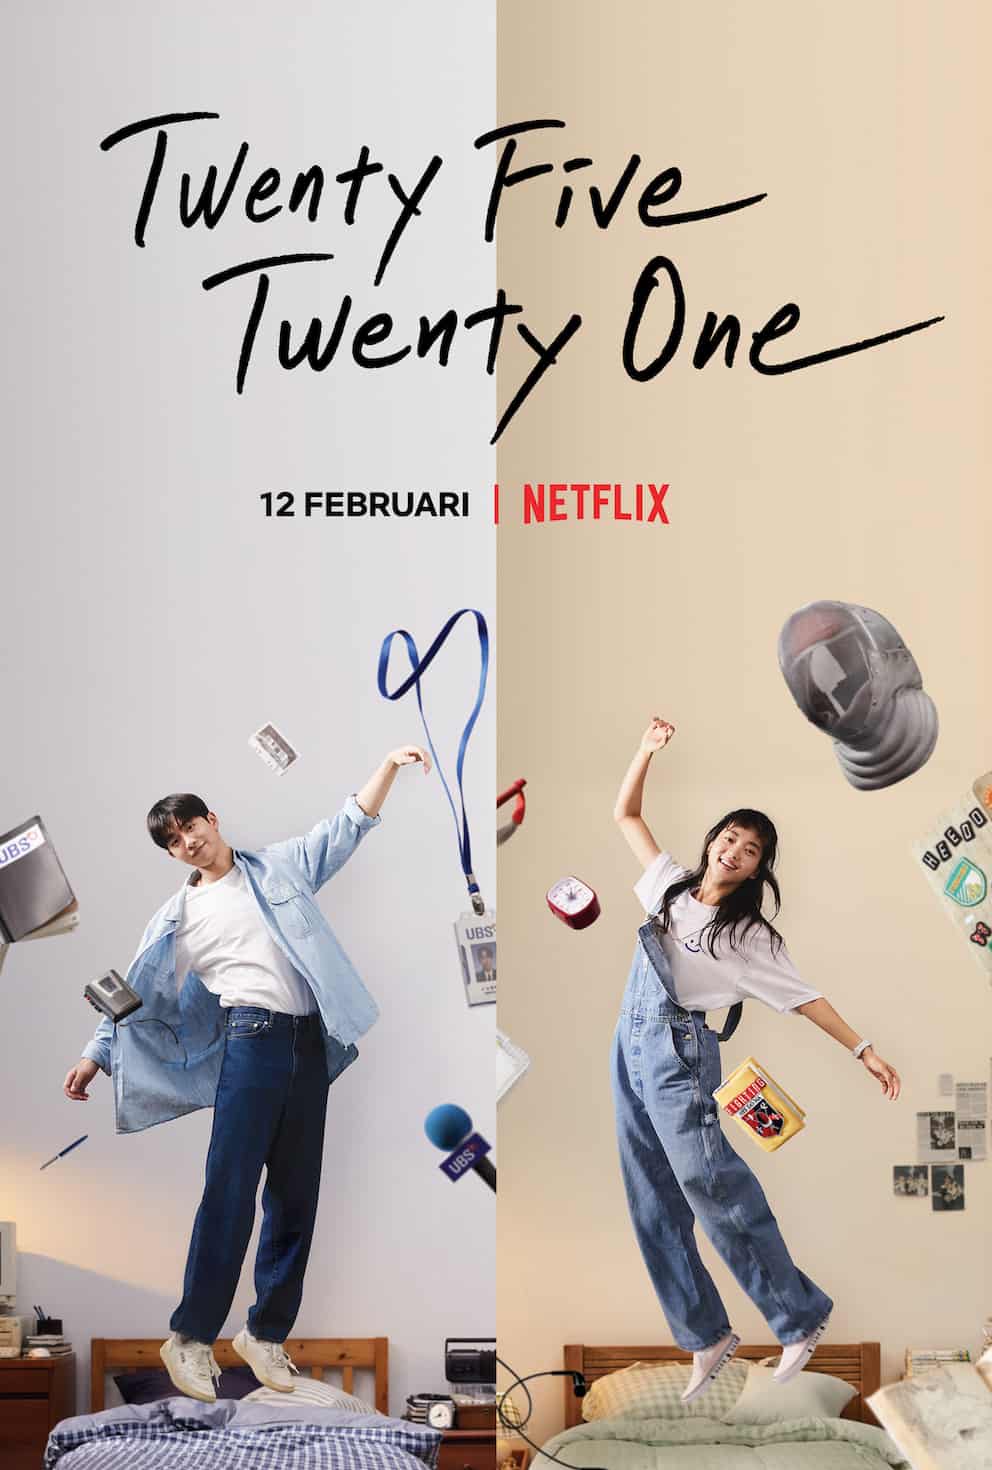 Twenty Five Twenty One: Upcoming Netflix K-Drama 2022 Release Date Announced!